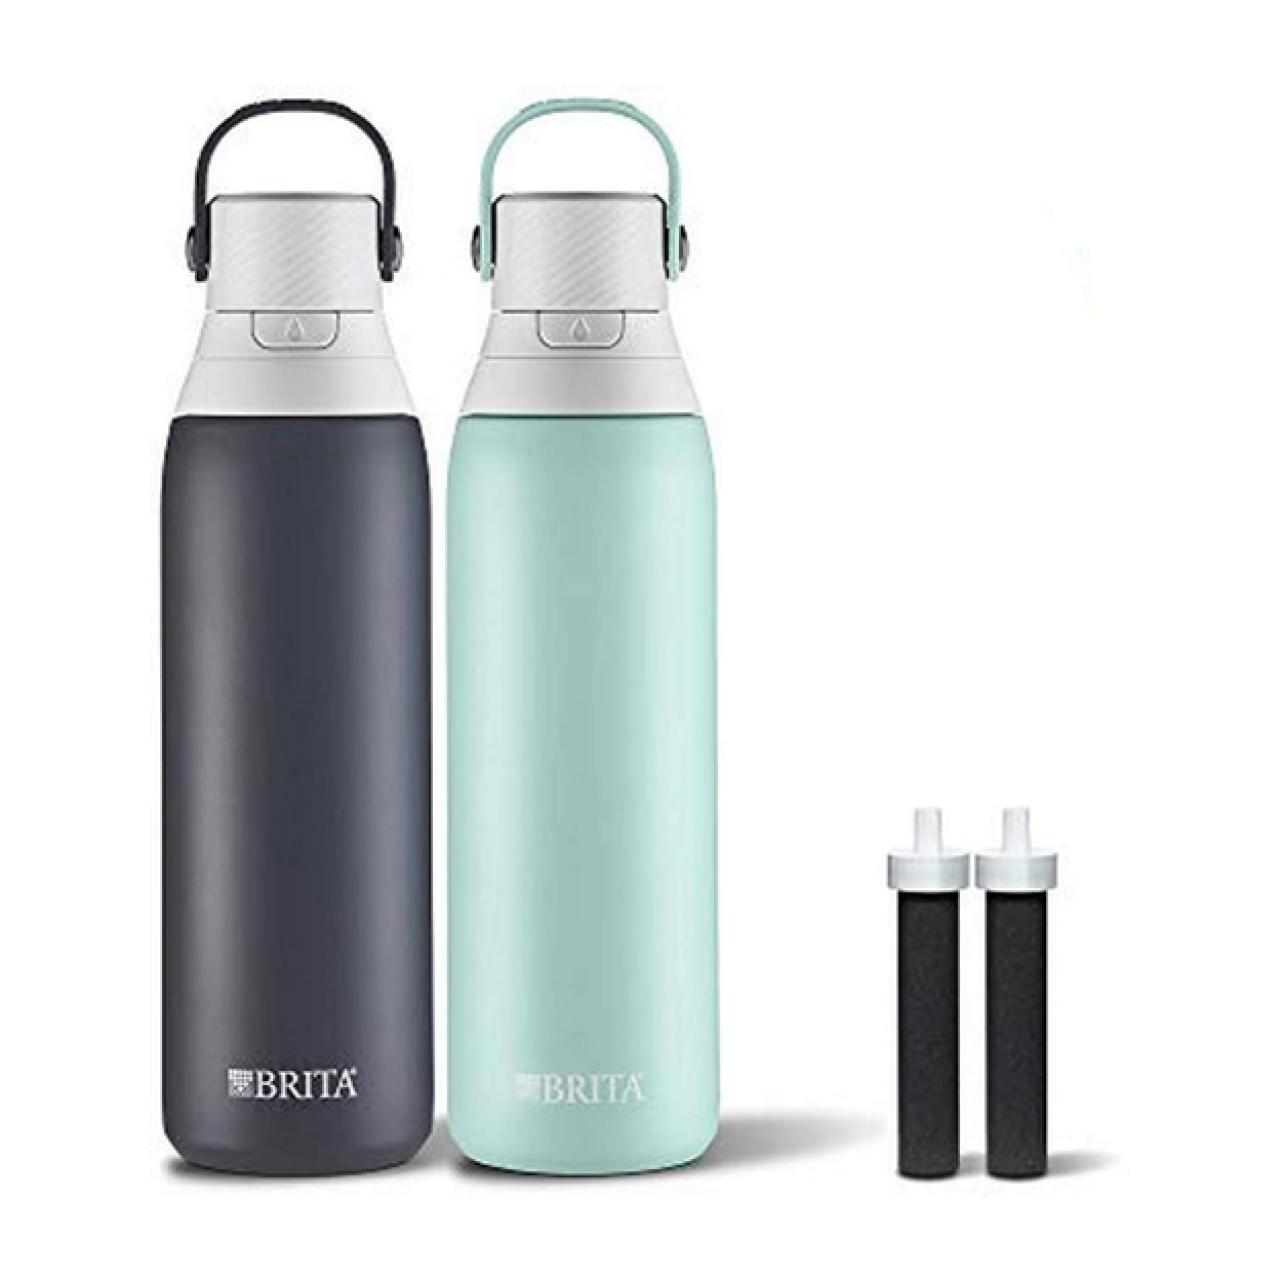 2 Best Self-Cleaning Water Bottles - CNET